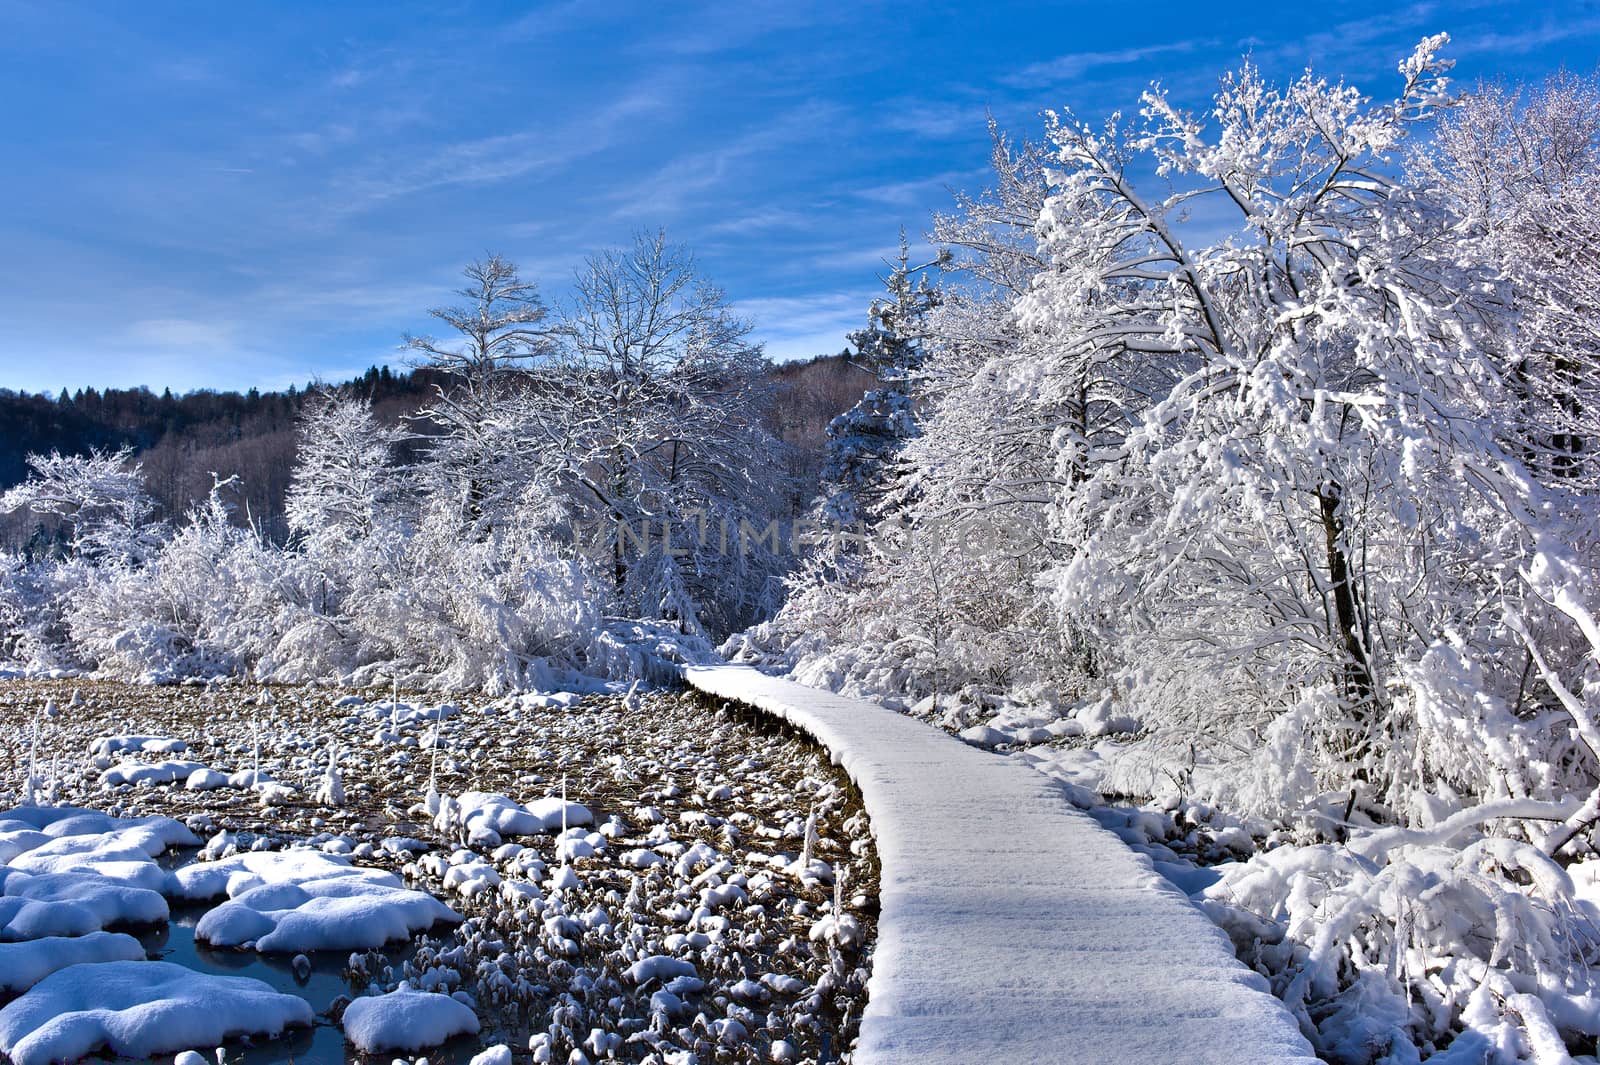 Road to Winter Wonderland by jetstream4wd